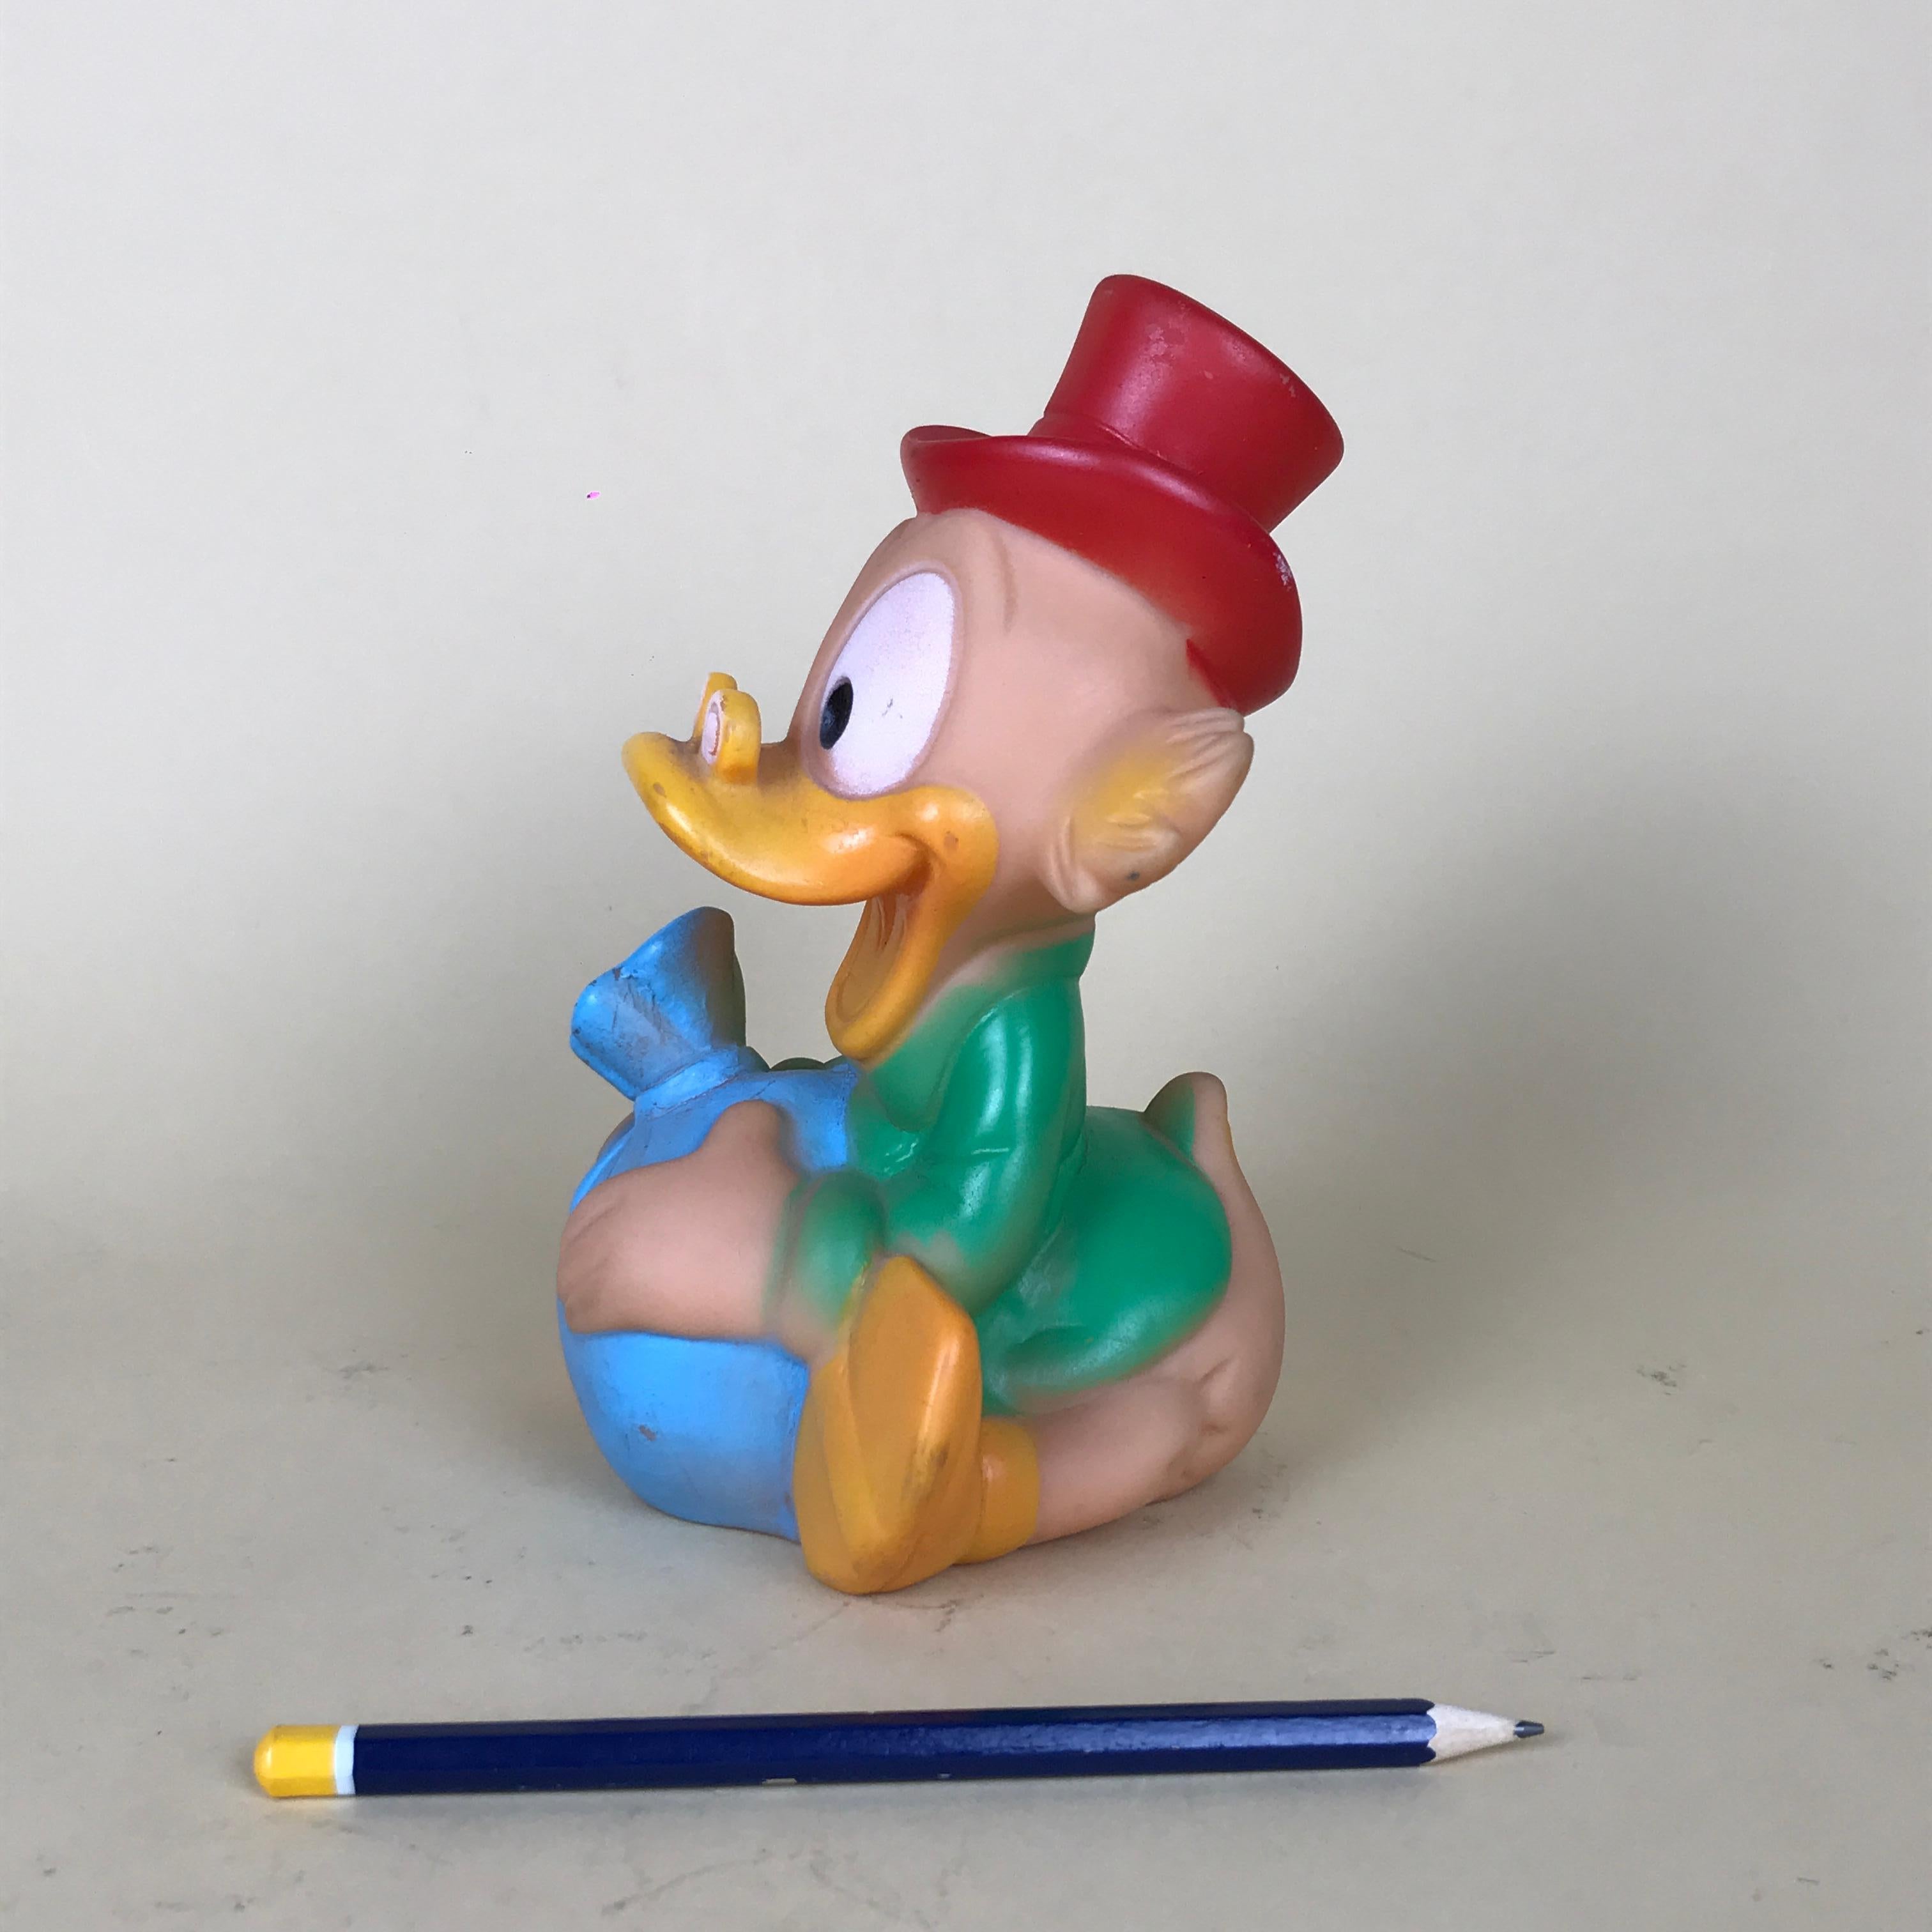 Mid-20th Century 1960s Vintage Uncle Scrooge Squeak Toy Made in Spain by Jugasa for Disney